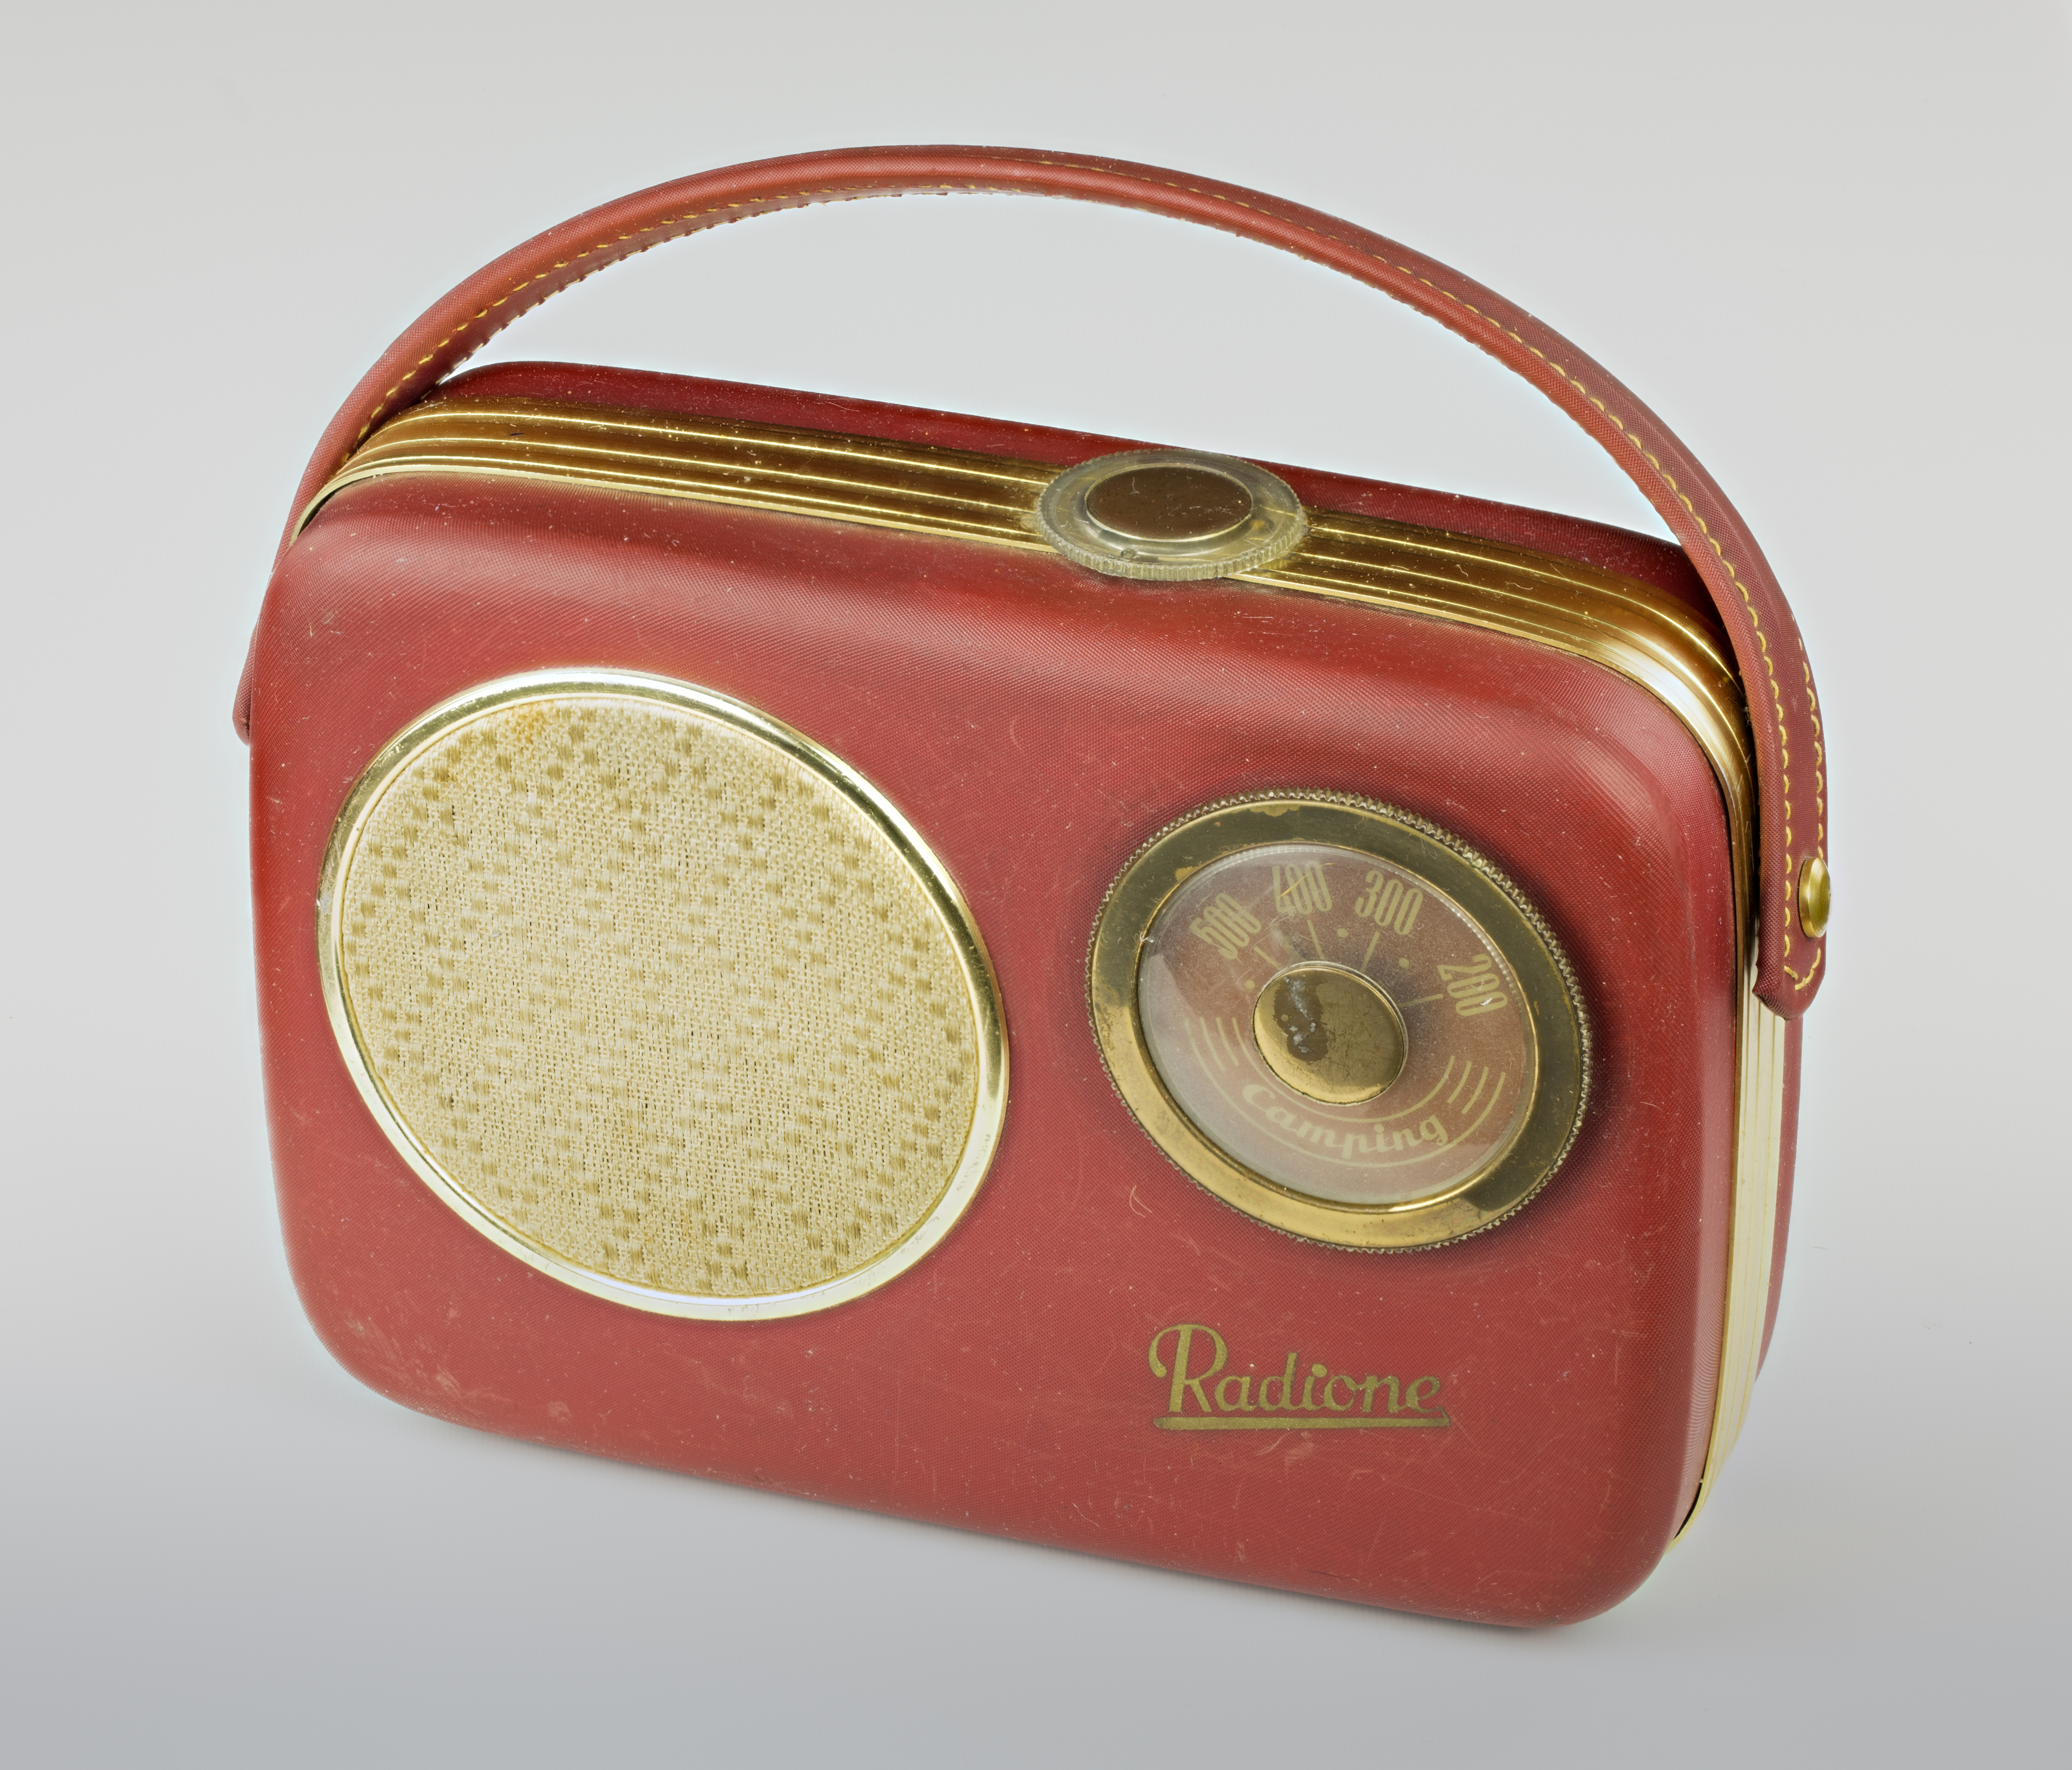 Modell Camping Radione 1954 (RADIO Nikolaus Eltz) Wien - 0972